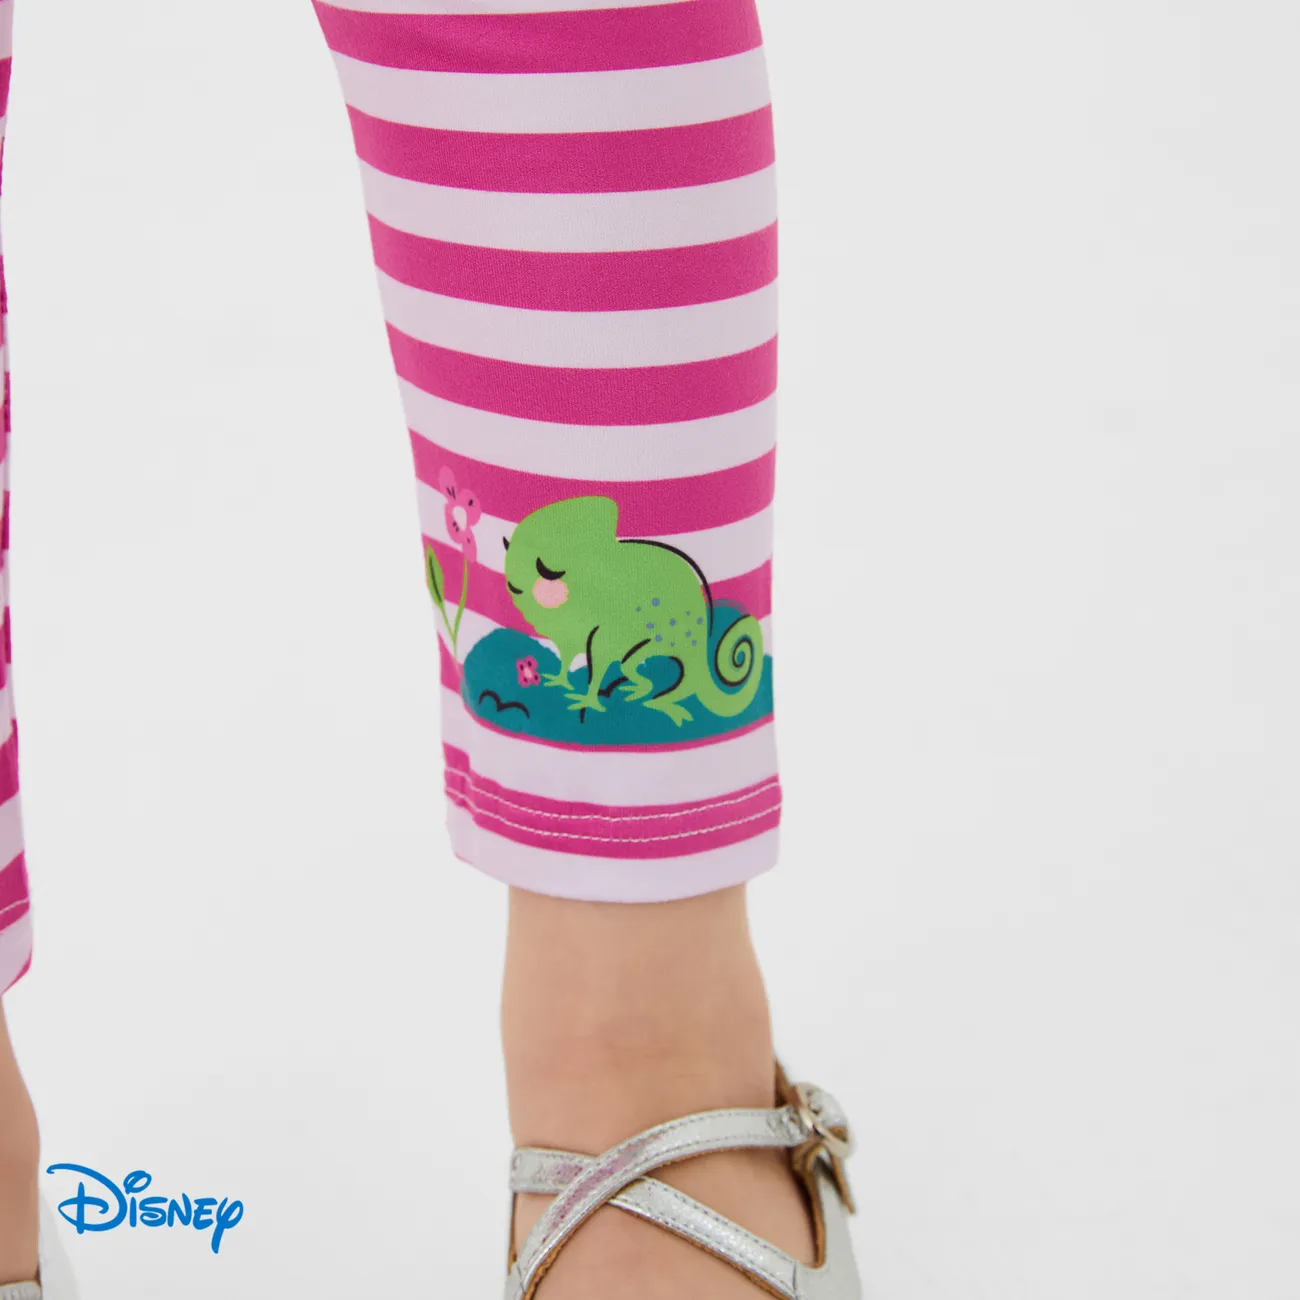 Disney Princess Toddler Girl 2pcs Character Print Peplum Long-sleeve Tee and Stripe Pants Set  Light Purple big image 1